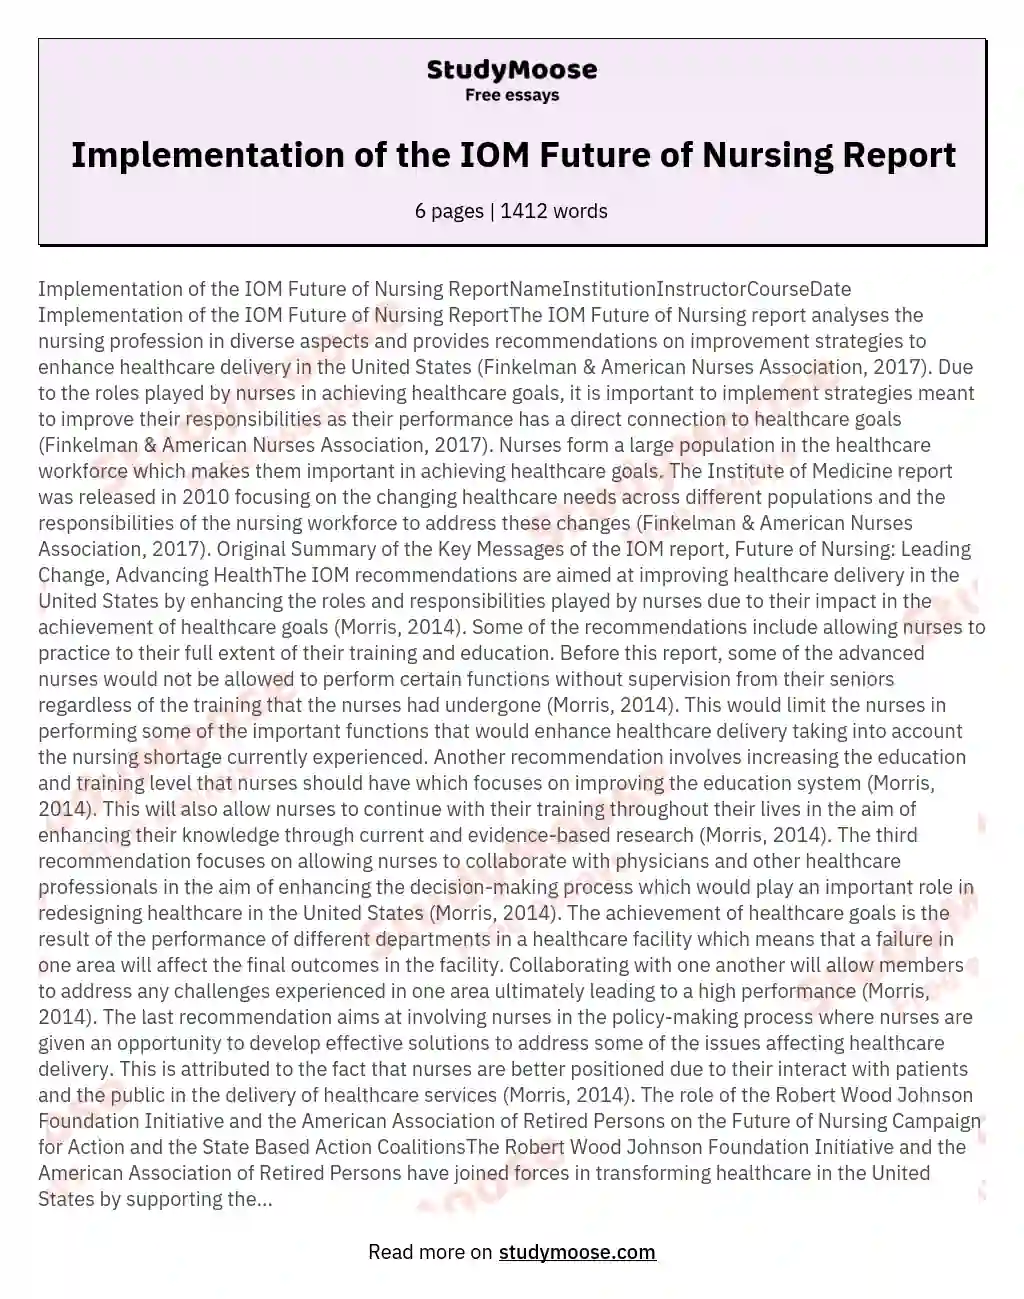 Implementation of the IOM Future of Nursing Report essay